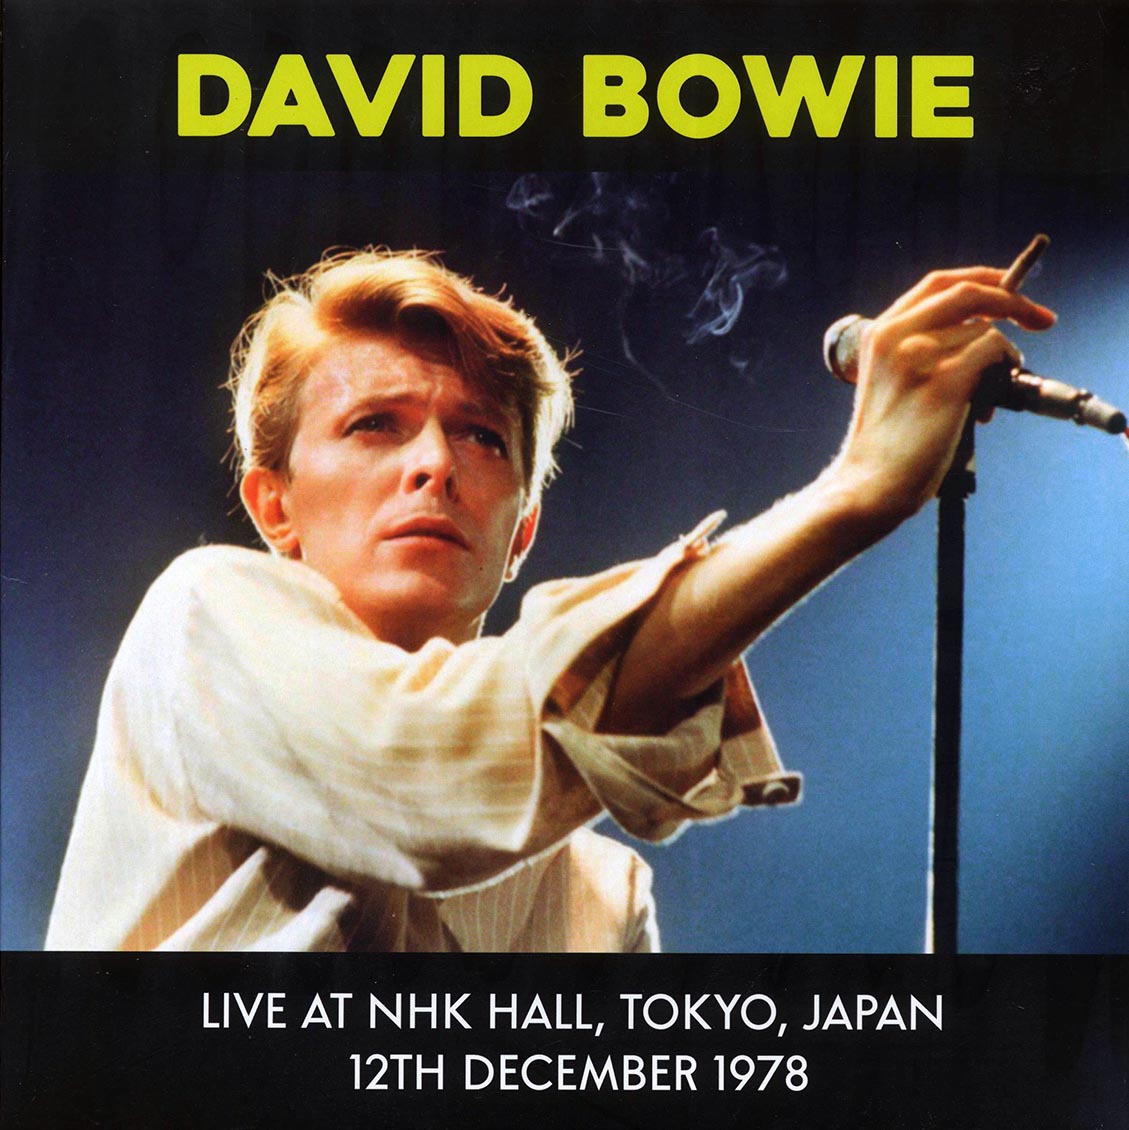 David Bowie - Live At NHK Hall, Tokyo, Japan, 12th December 1978 (ltd. 500 copies made) (pink vinyl) - Vinyl LP